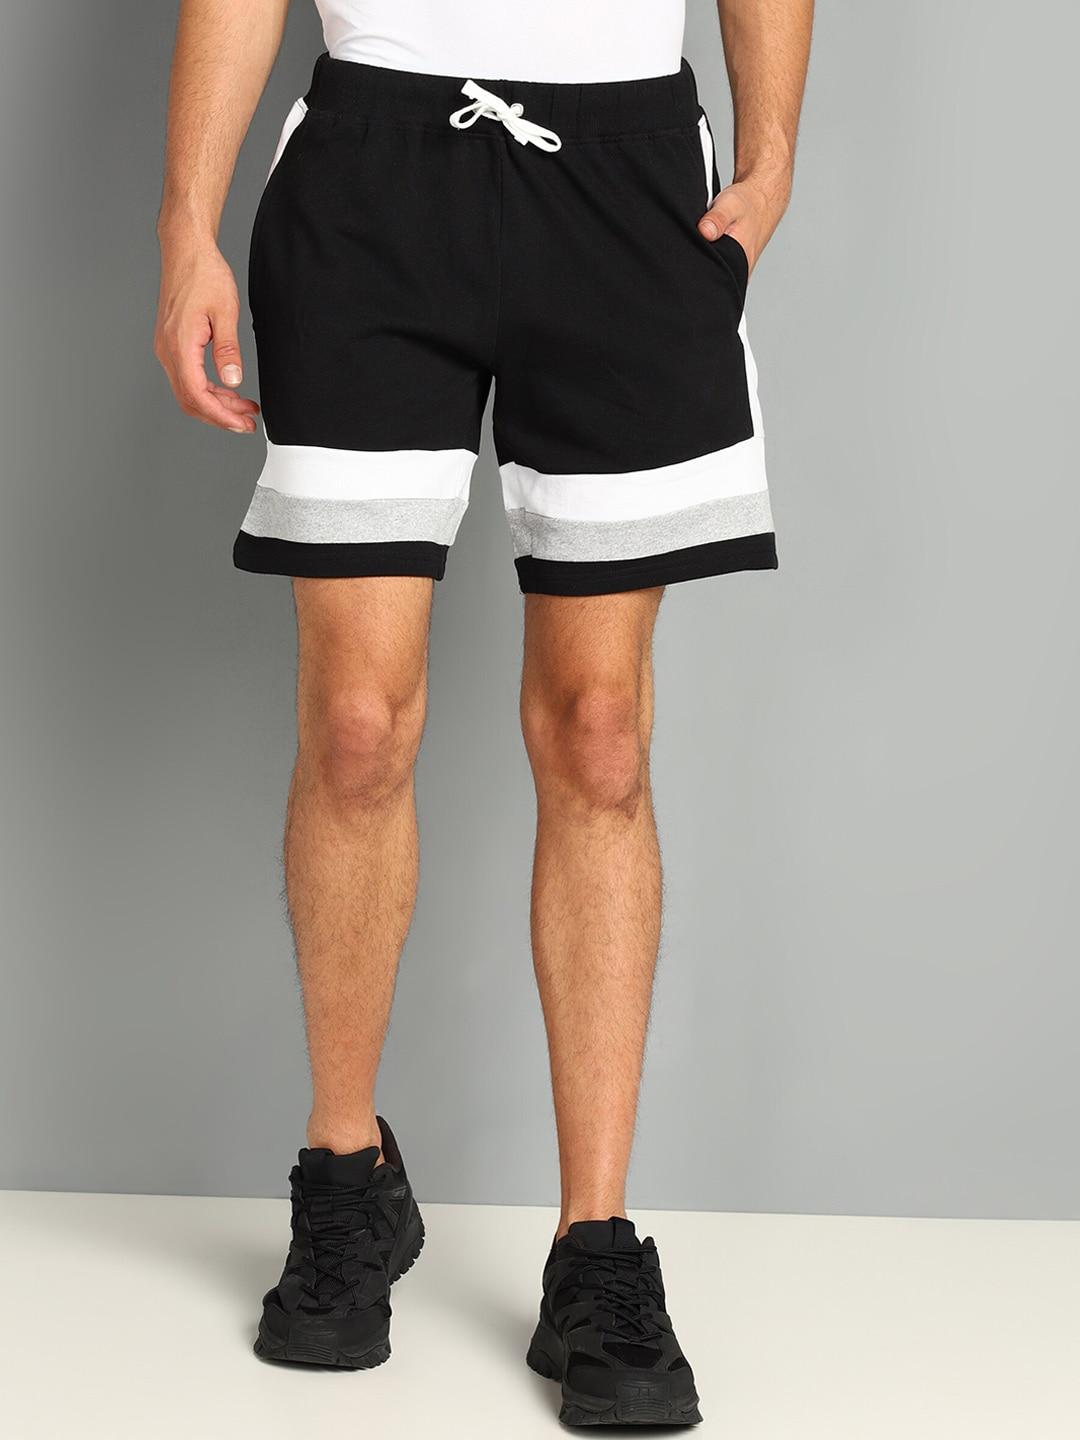 sharktribe men black sports shorts